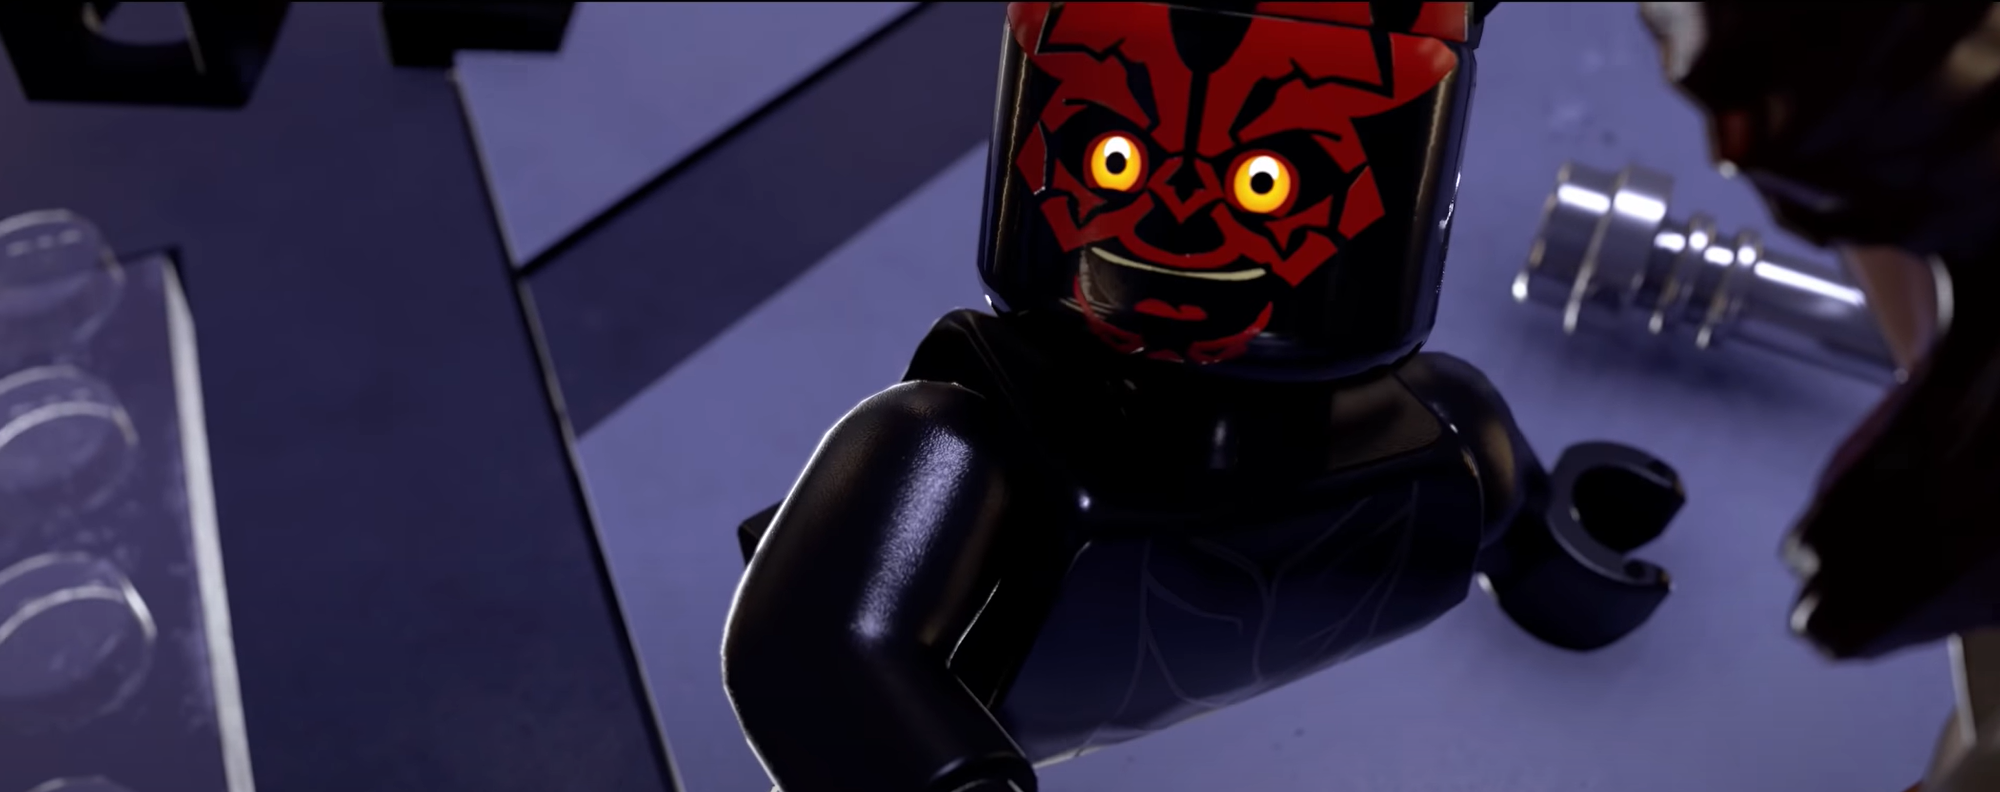 Darth Maul cut in half in Lego Star Wars: The Skywalker Saga